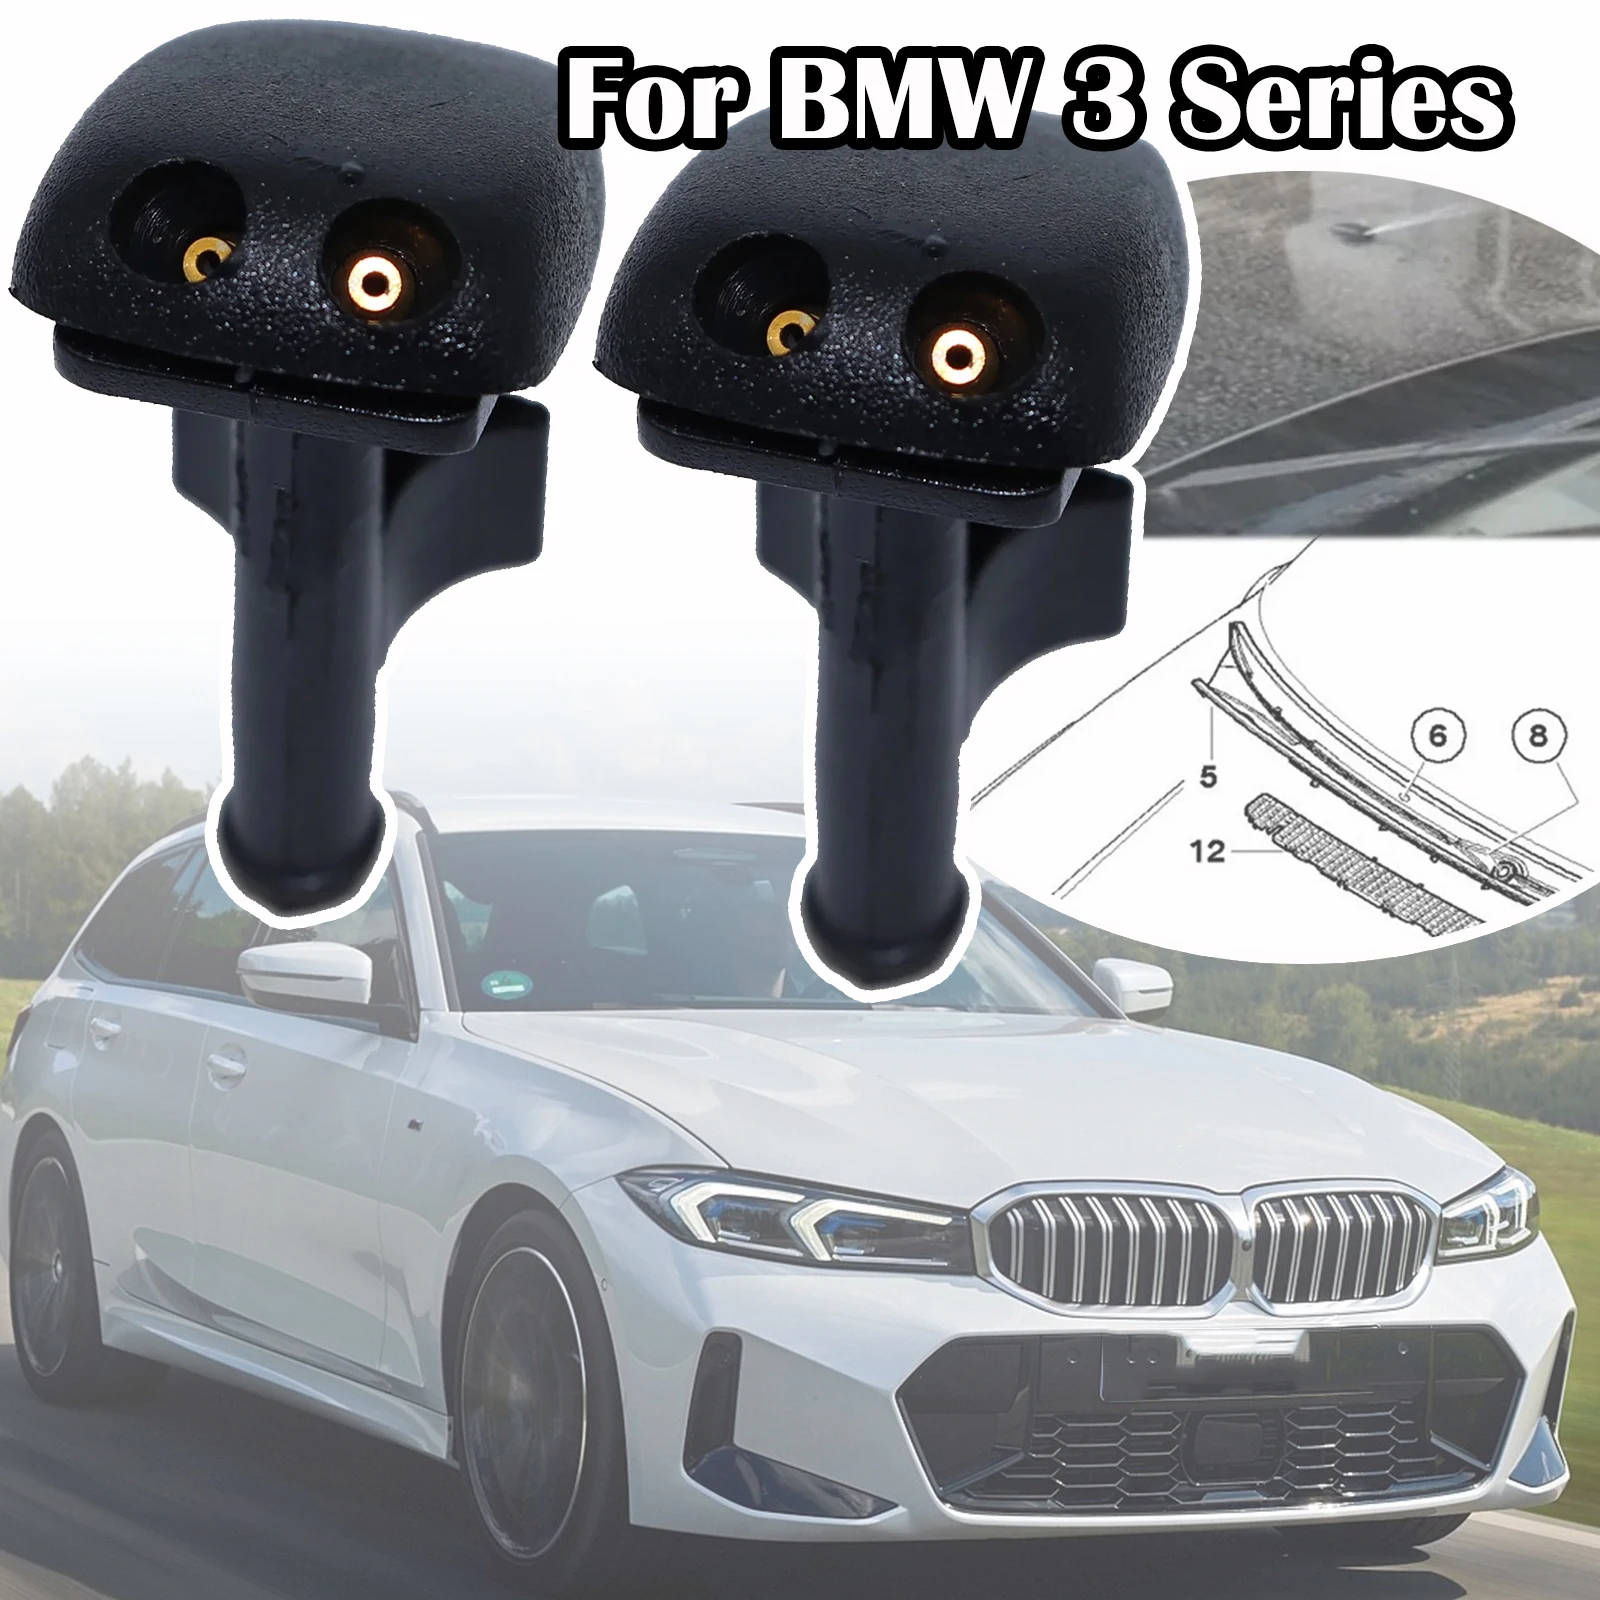 

2Pc Front Windshield Wiper Washer Spray Nozzle Jets Kit Compact For BMW 3 Series E36 316i 318i 320i 323i 325i 328i 318tds M3 Z3